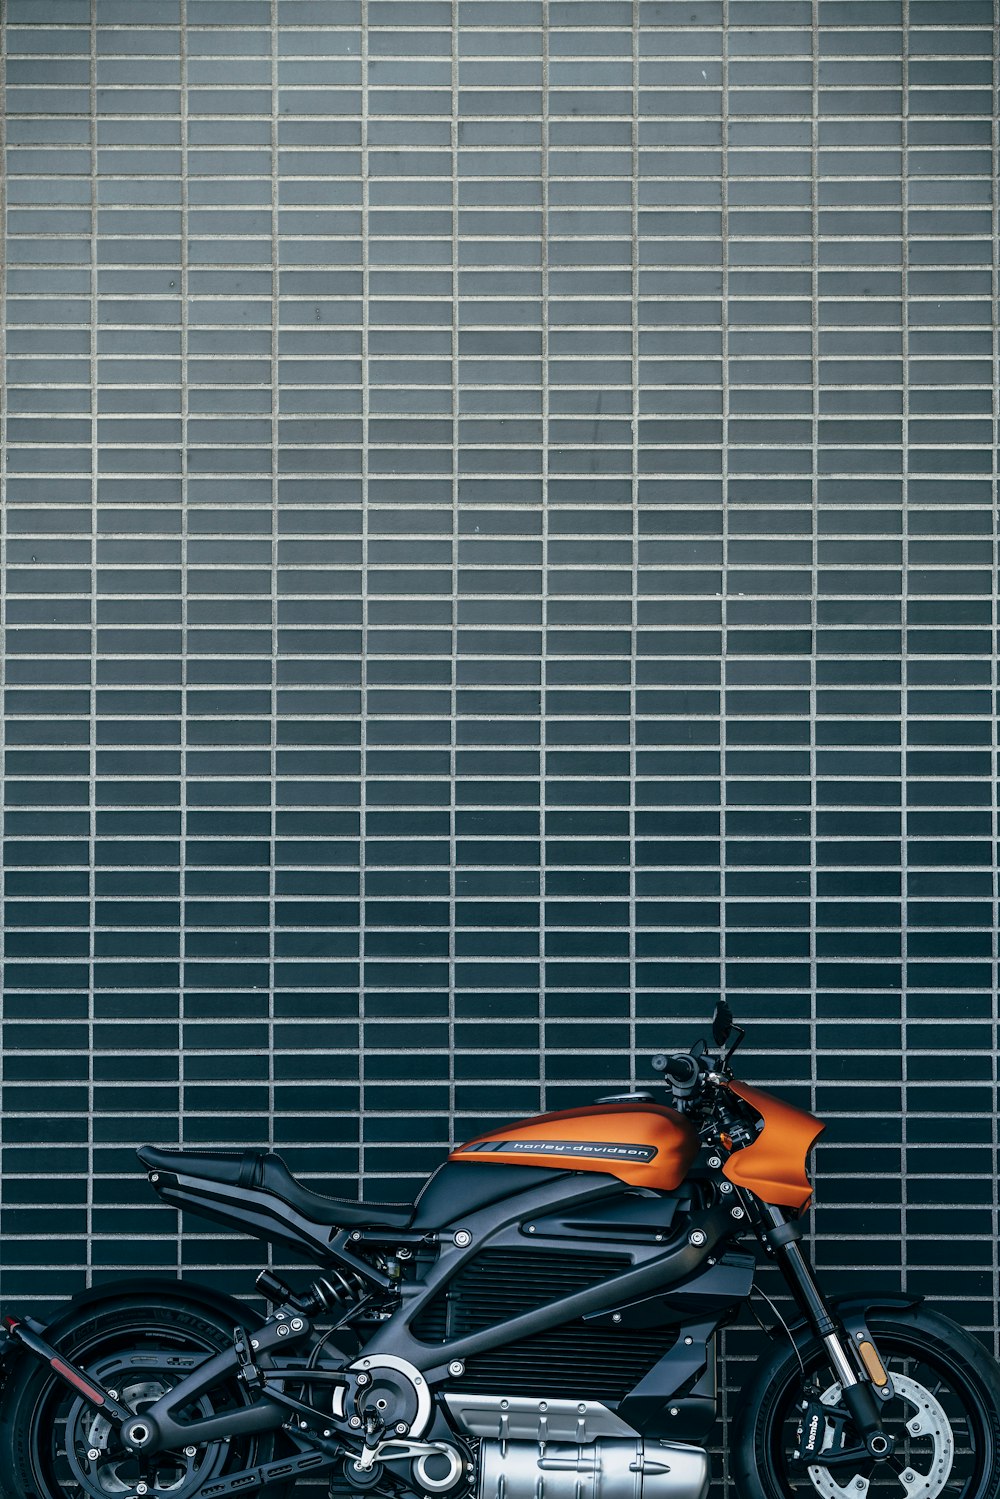 orange and black motorcycle